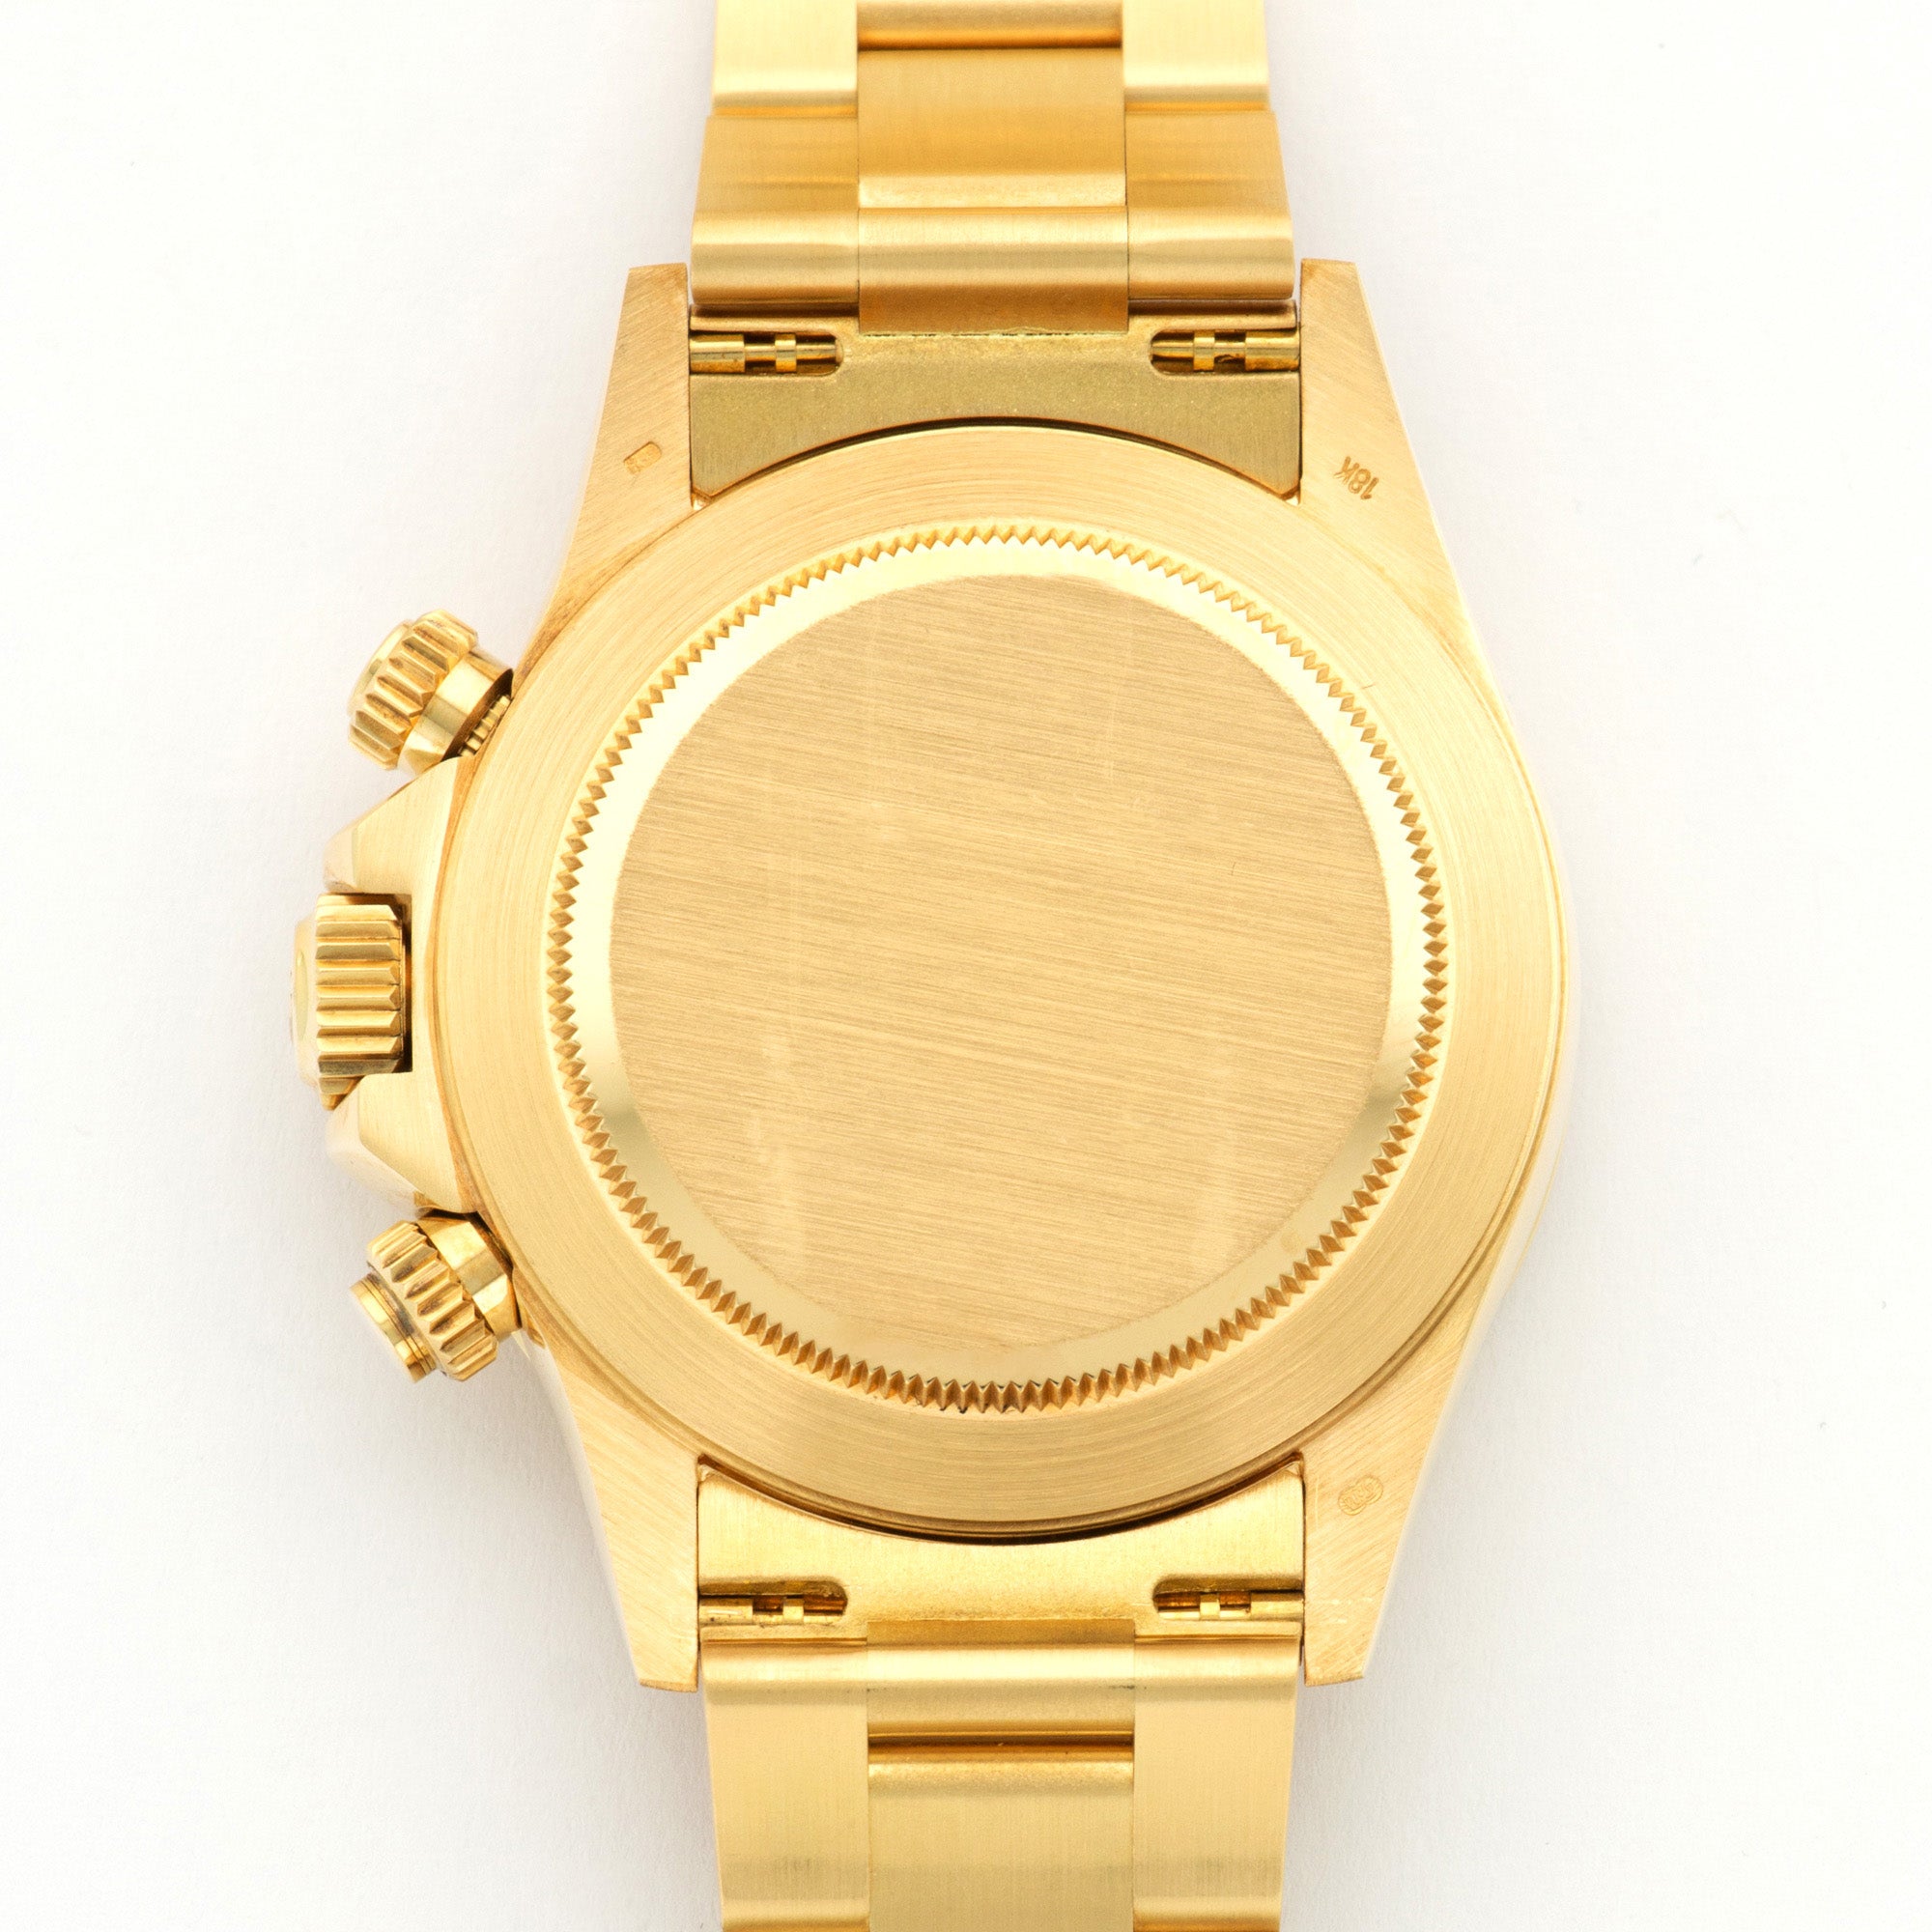 Rolex - Rolex Yellow Gold Daytona Black Diamond Watch Ref. 16528 - The Keystone Watches